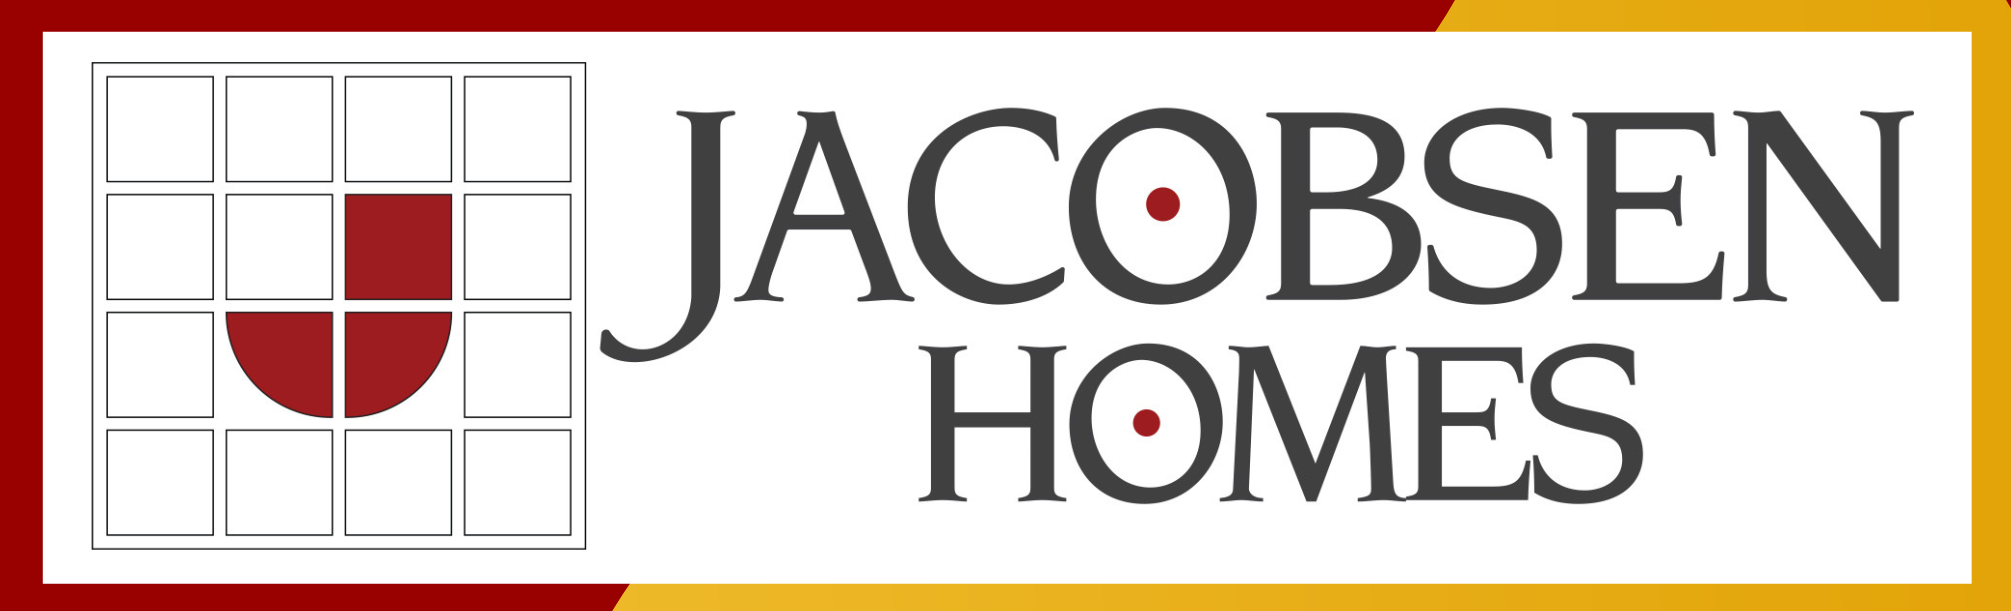 Jacobsen_homes123456